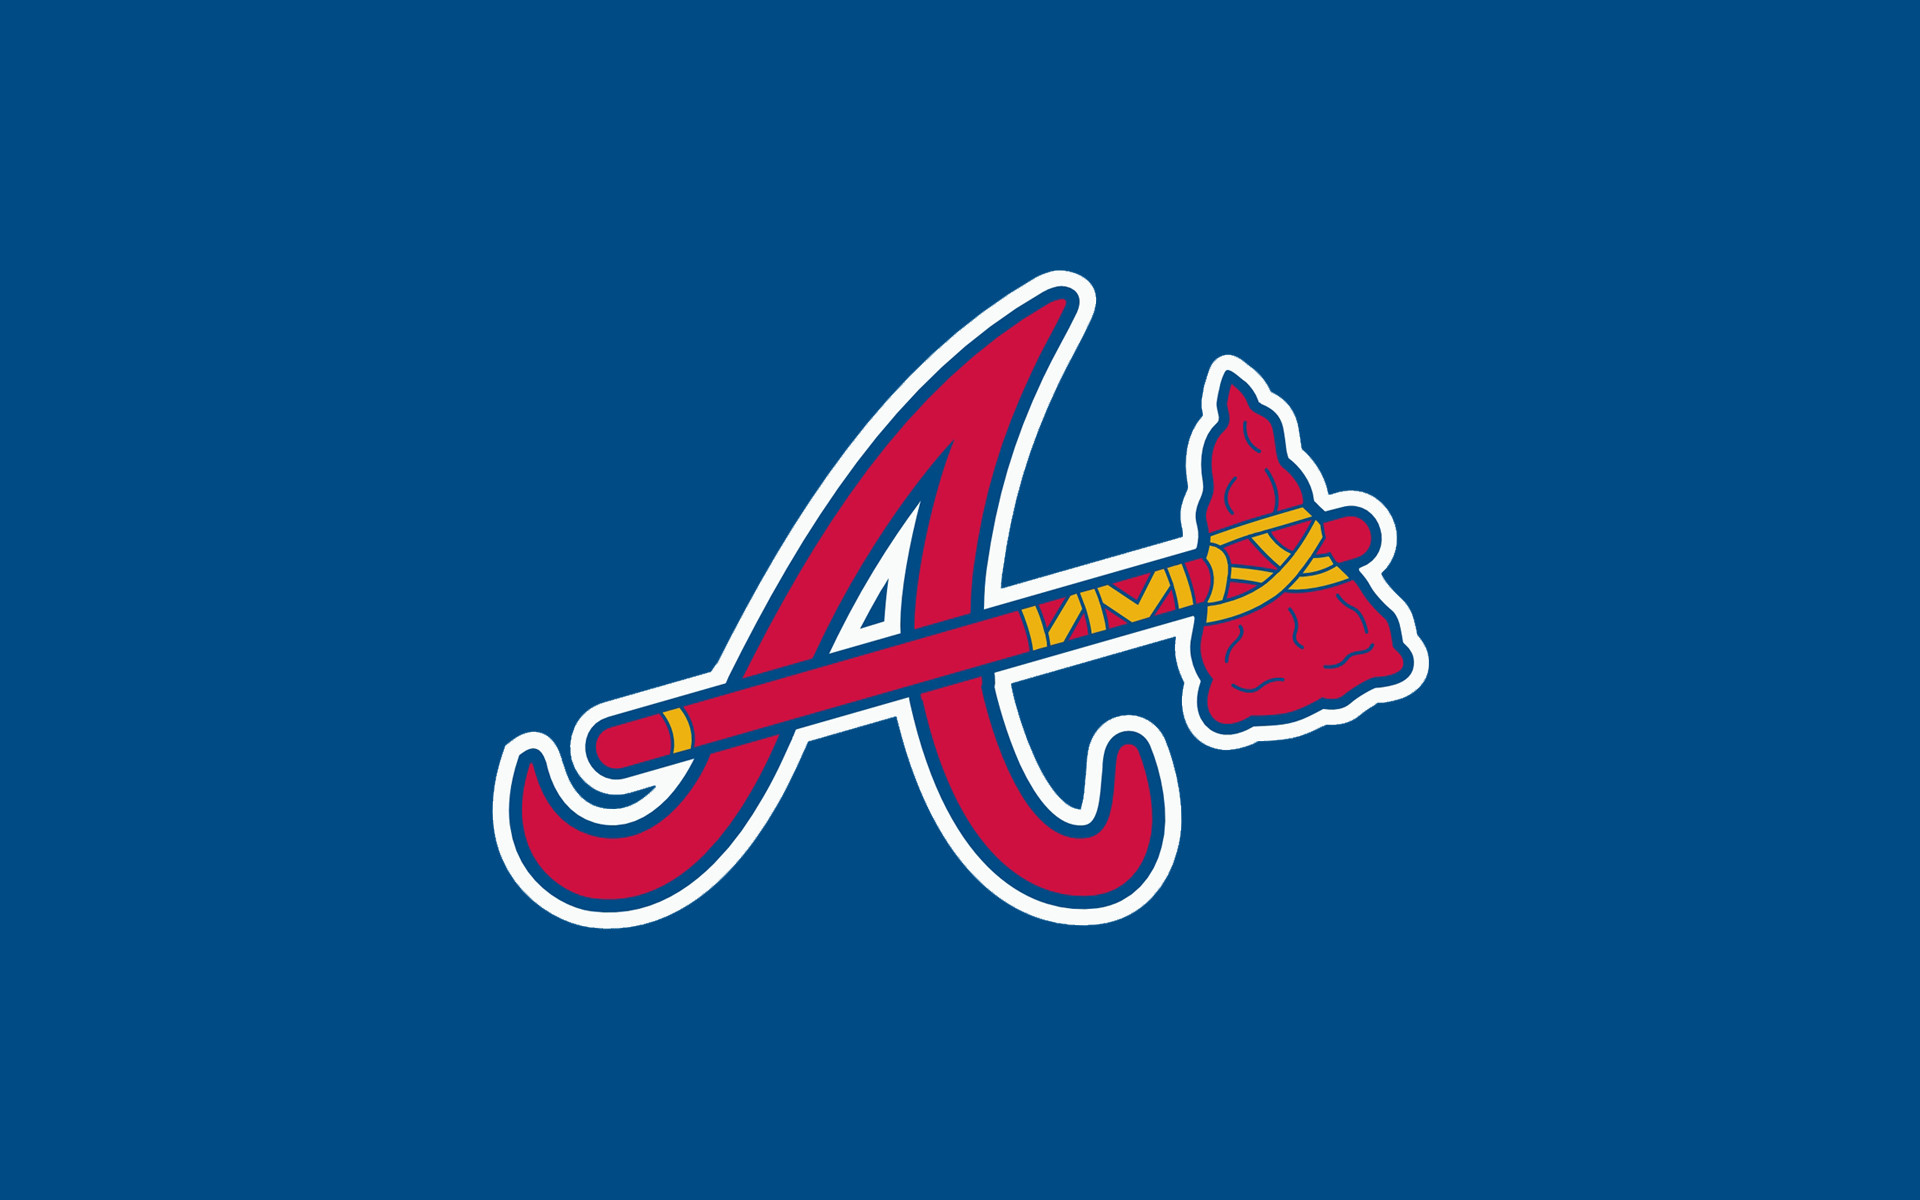 Atlanta Braves Wallpaper Image